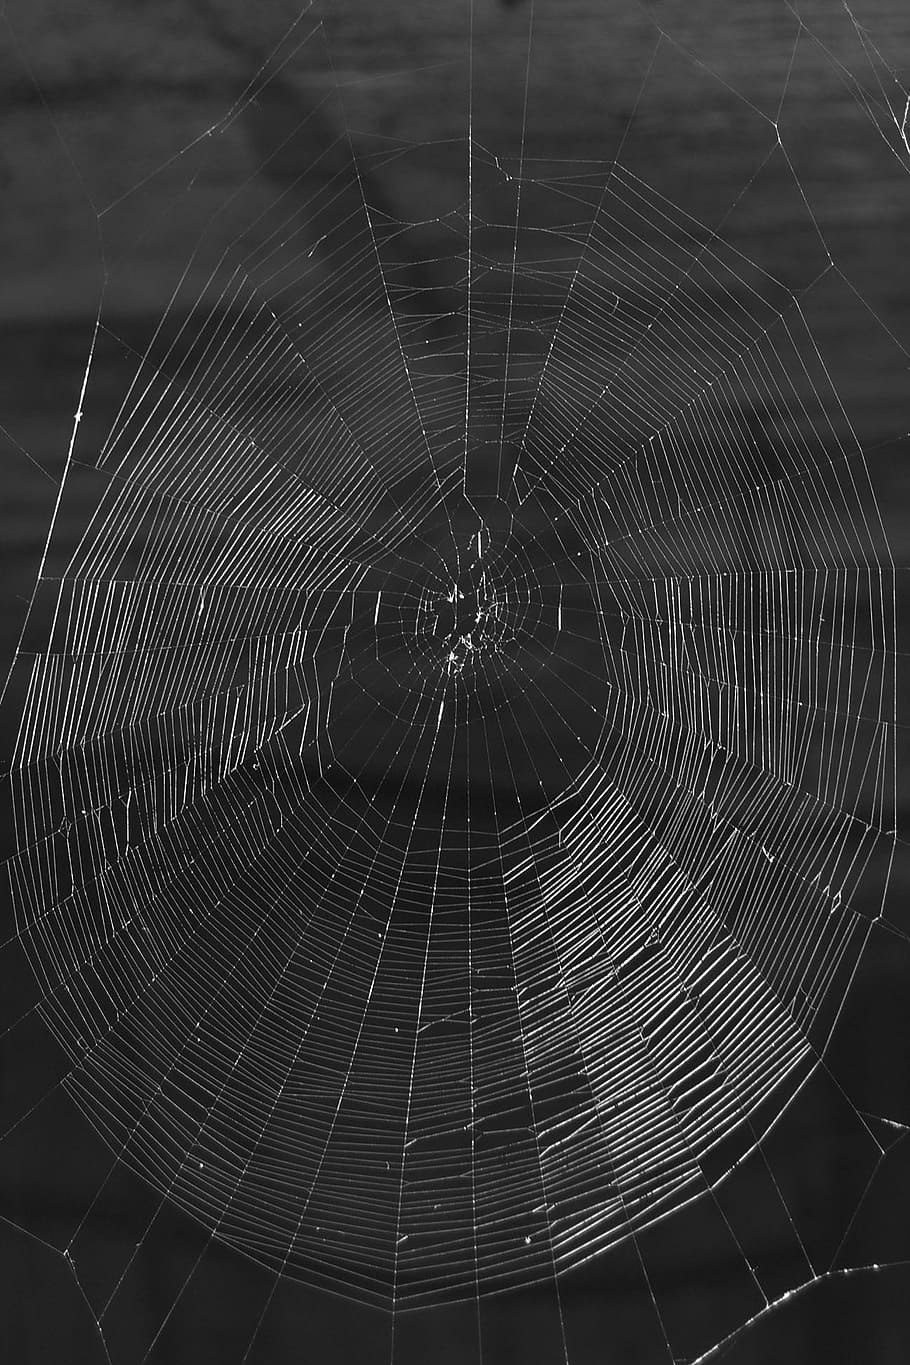 Network, Cobweb, Threads, Nature, black, white, background, spider Web, spider, drop